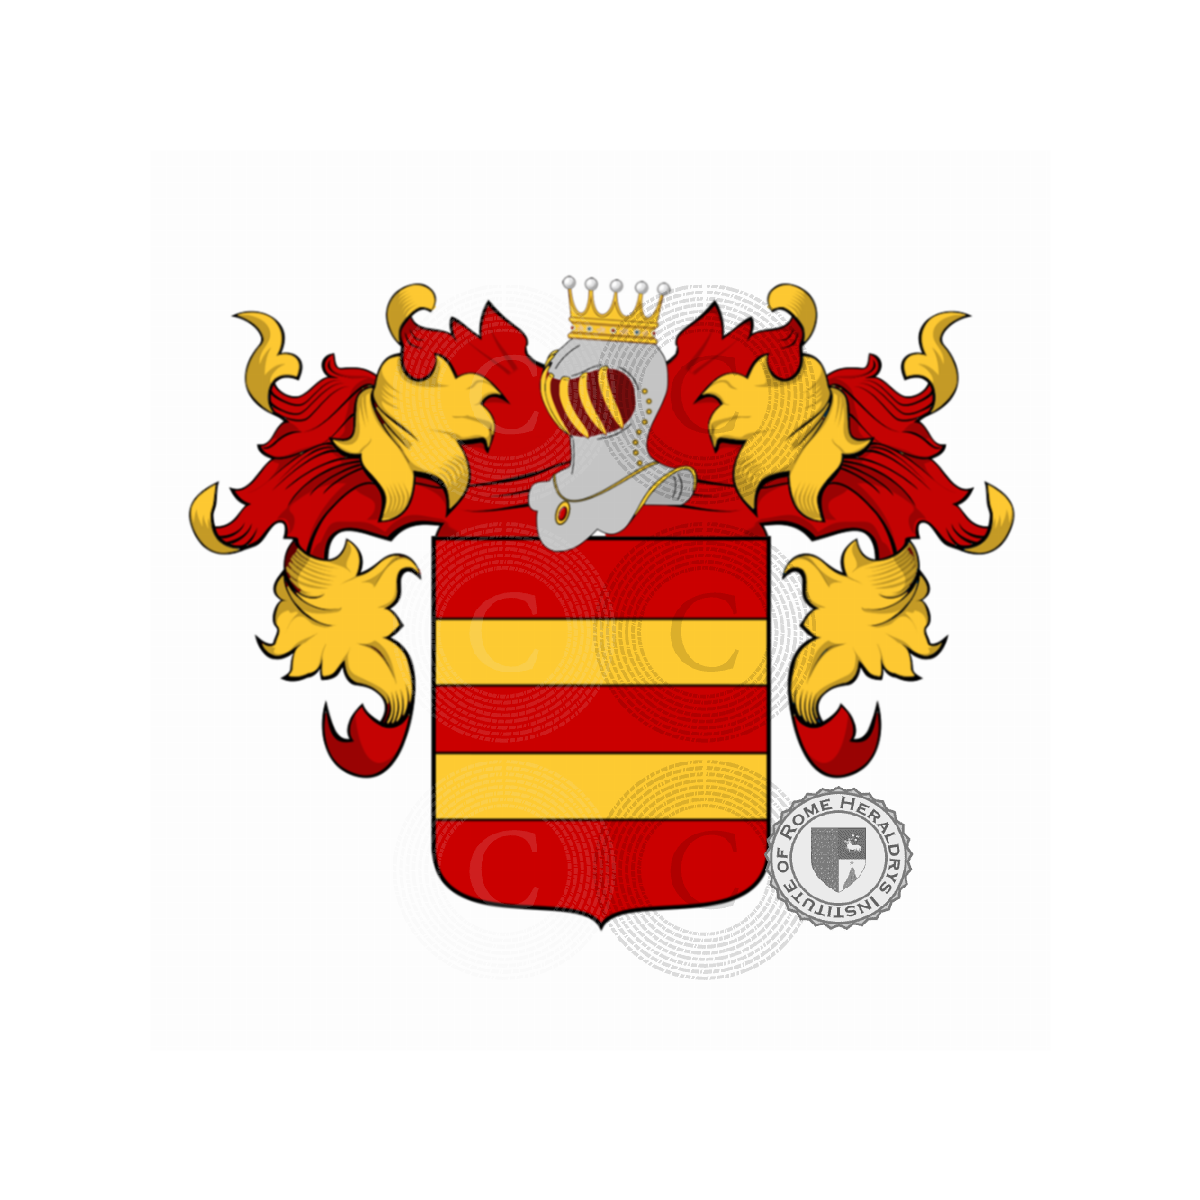 Wappen der FamilieVieri